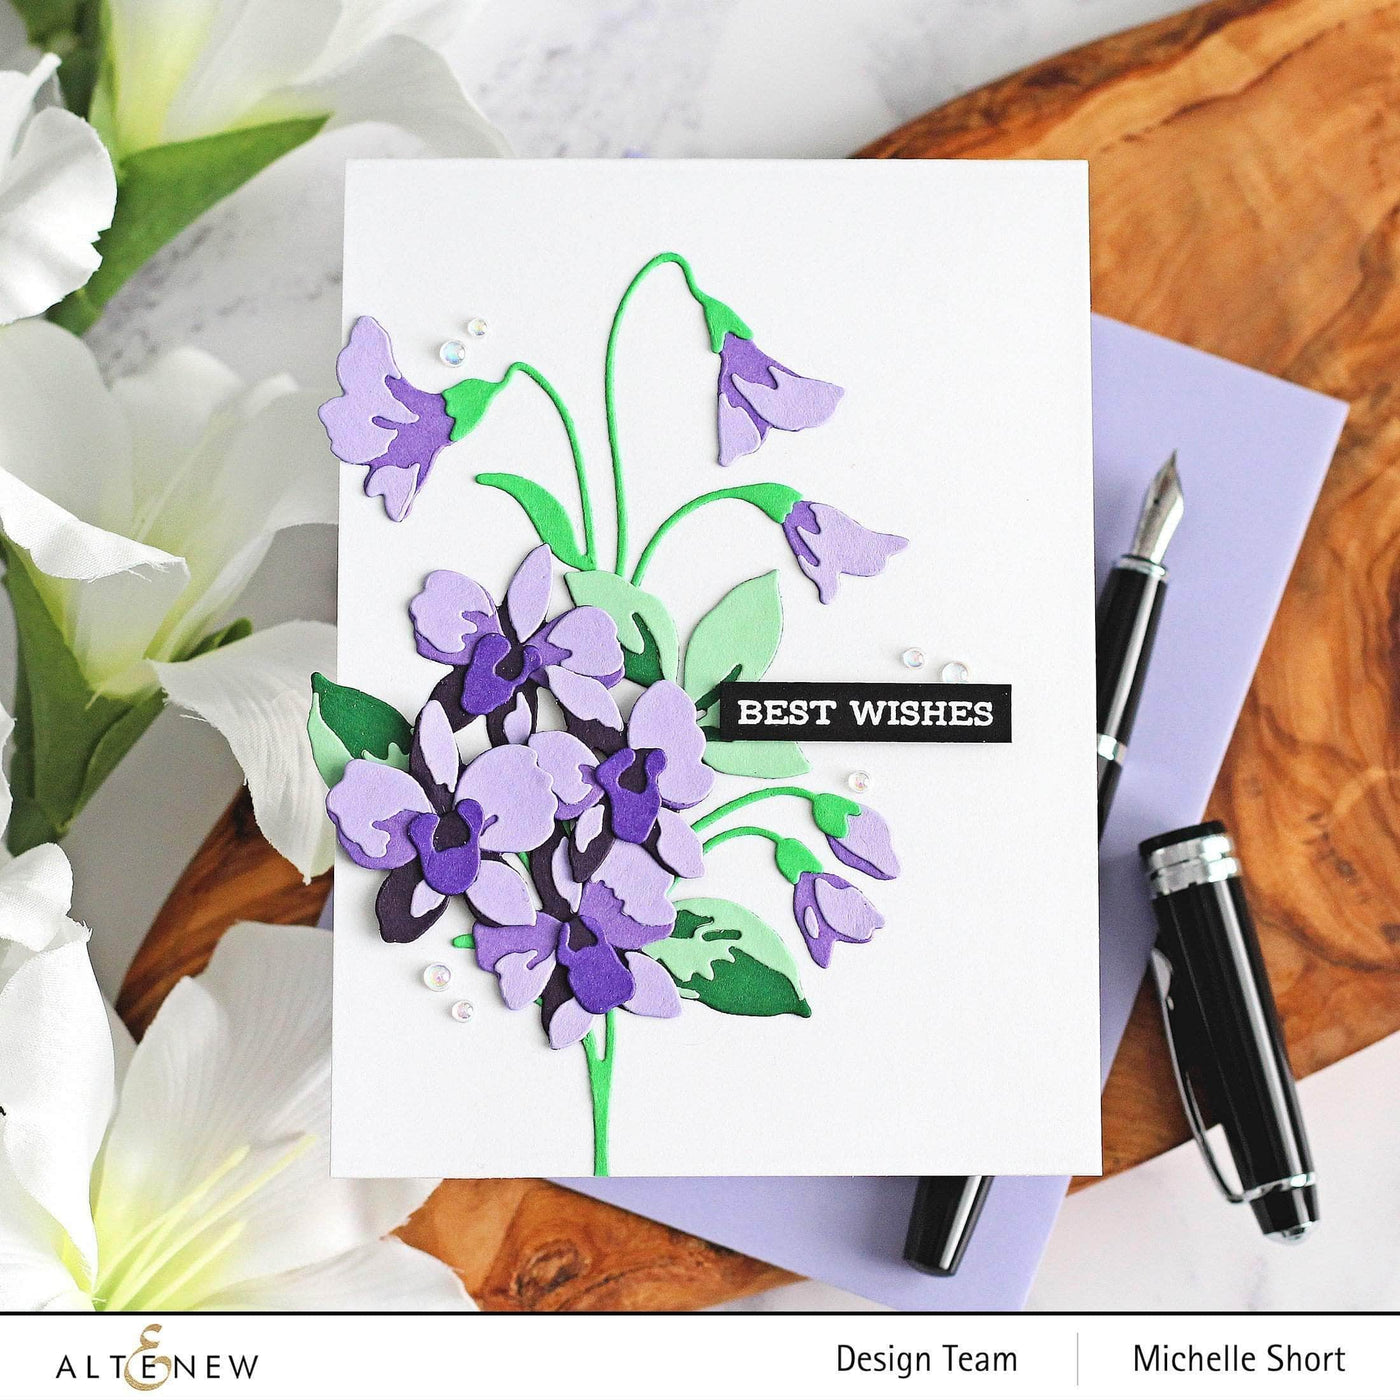 Altenew Die & Paper Bundle Craft-A-Flower: Dendrobium Orchid Layering Die Set & Gradient Cardstock Bundle